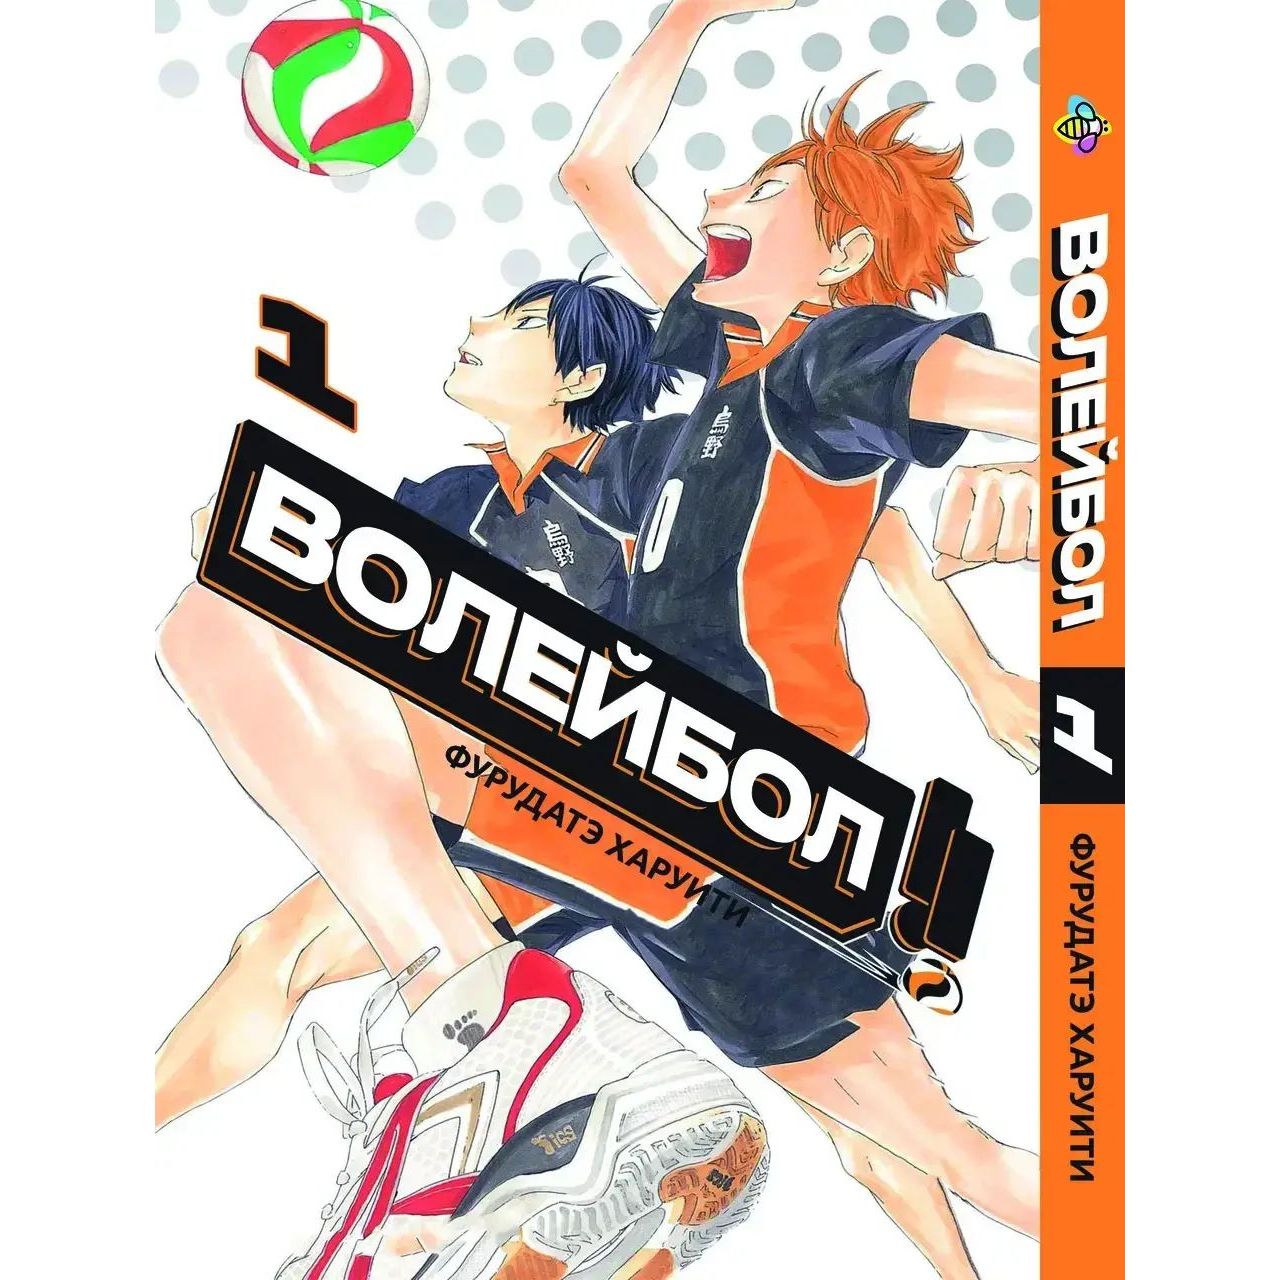 Комплект Манги Bee's Print Volleyball Волейбол BP VLSET 01 том 1-5 - Фурудате Харуити (1754784107.0) - фото 2